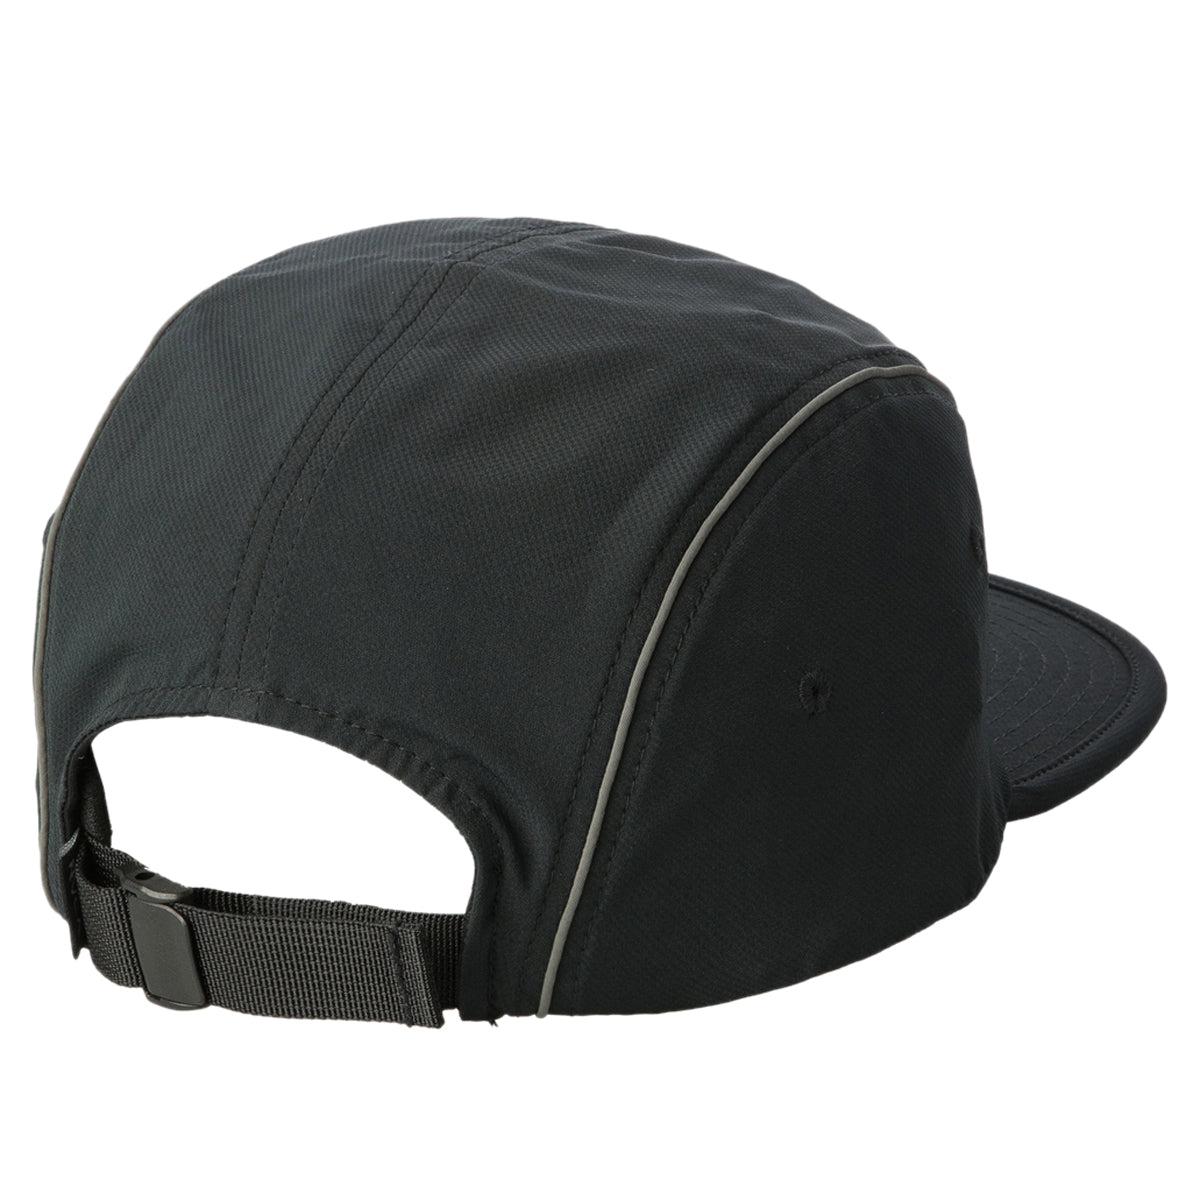 RVCA Yogger Hat - Black image 2